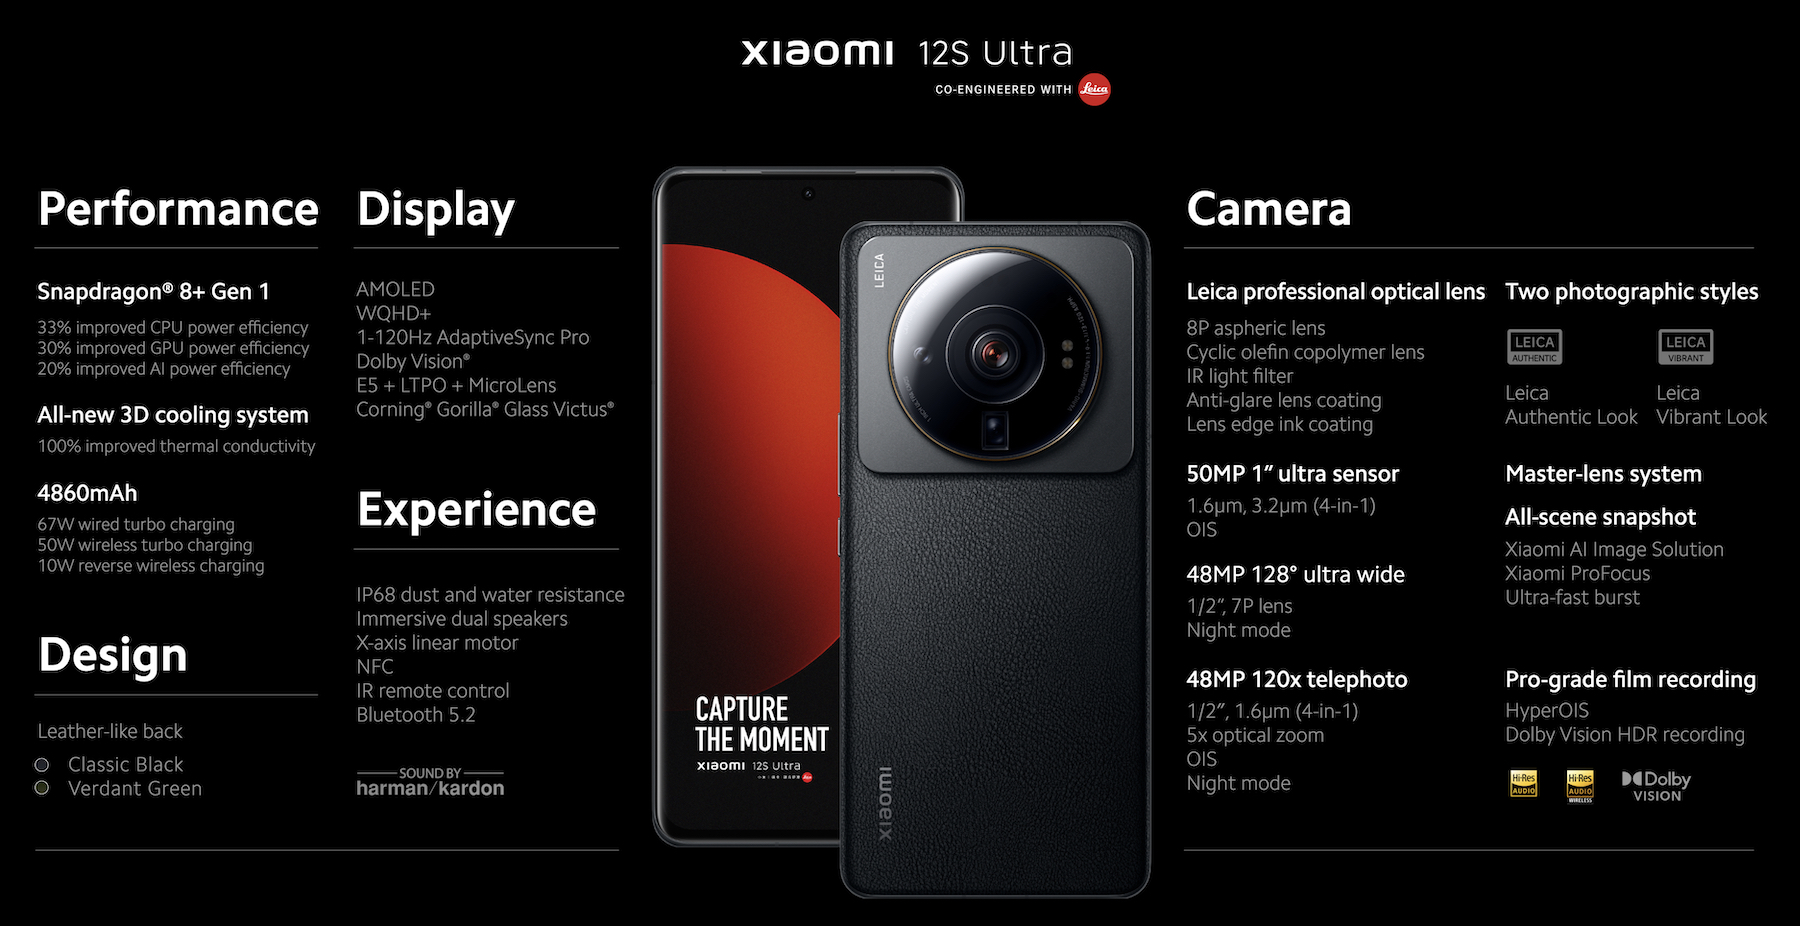 Xiaomi 12S Ultra pictures, official photos